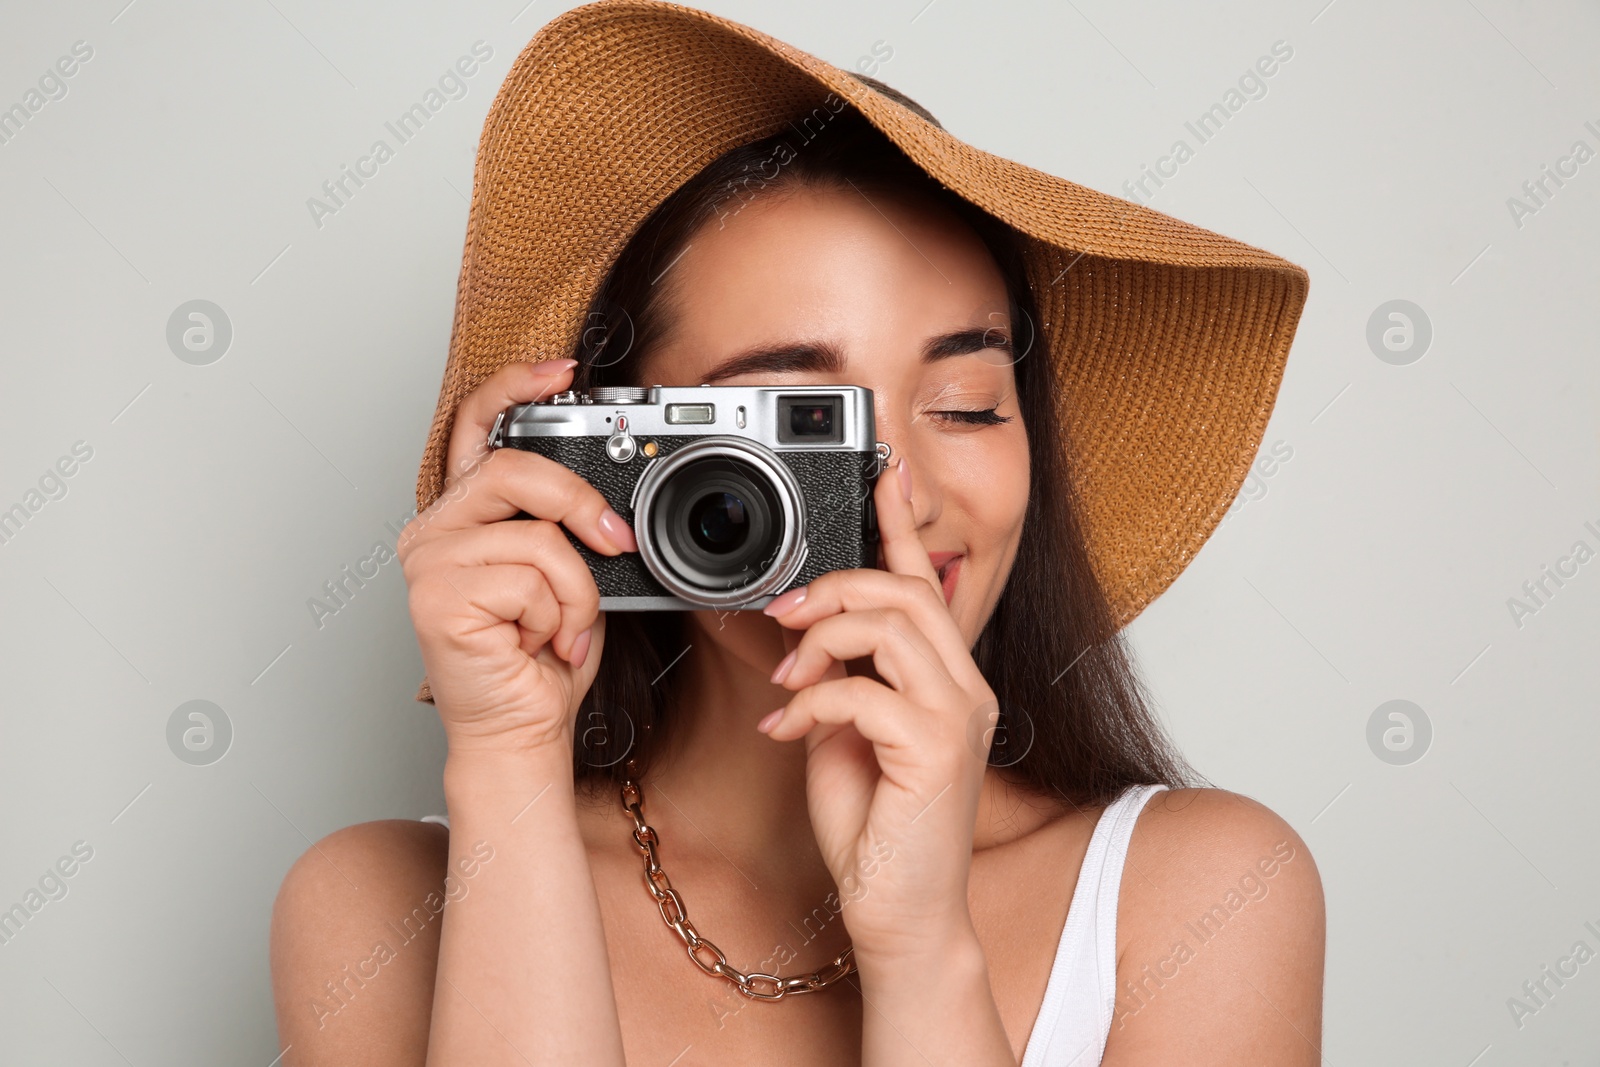 Photo of Beautiful young woman with straw hat and camera on light grey background. Stylish headdress